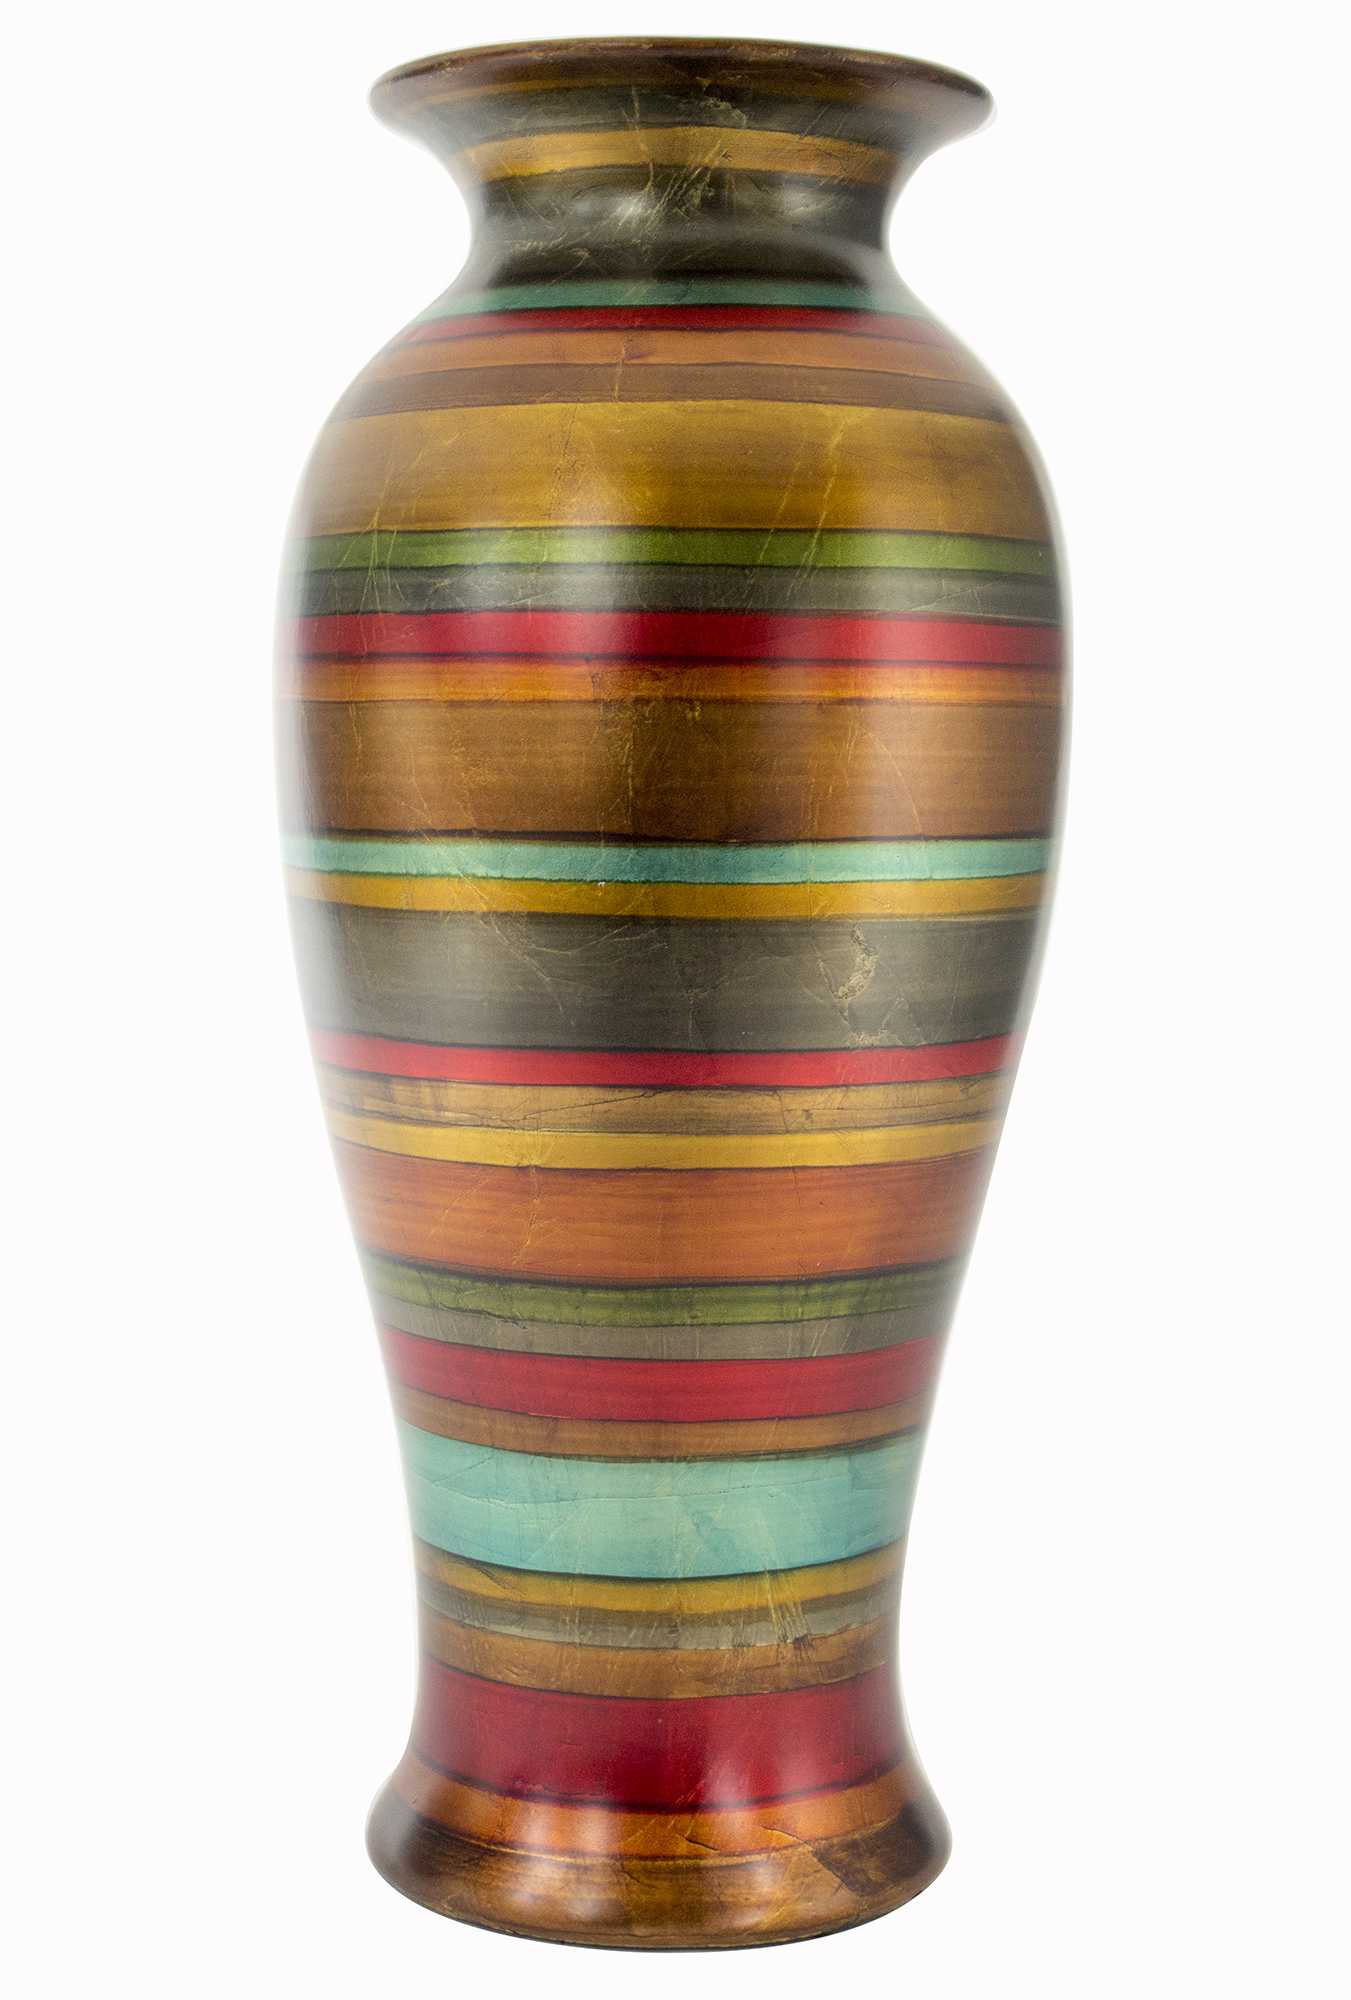 13" X 13" X 26" Gold, Bronze, Copper, Pewter, Red, Green And Blue Ceramic Ceramic Vase